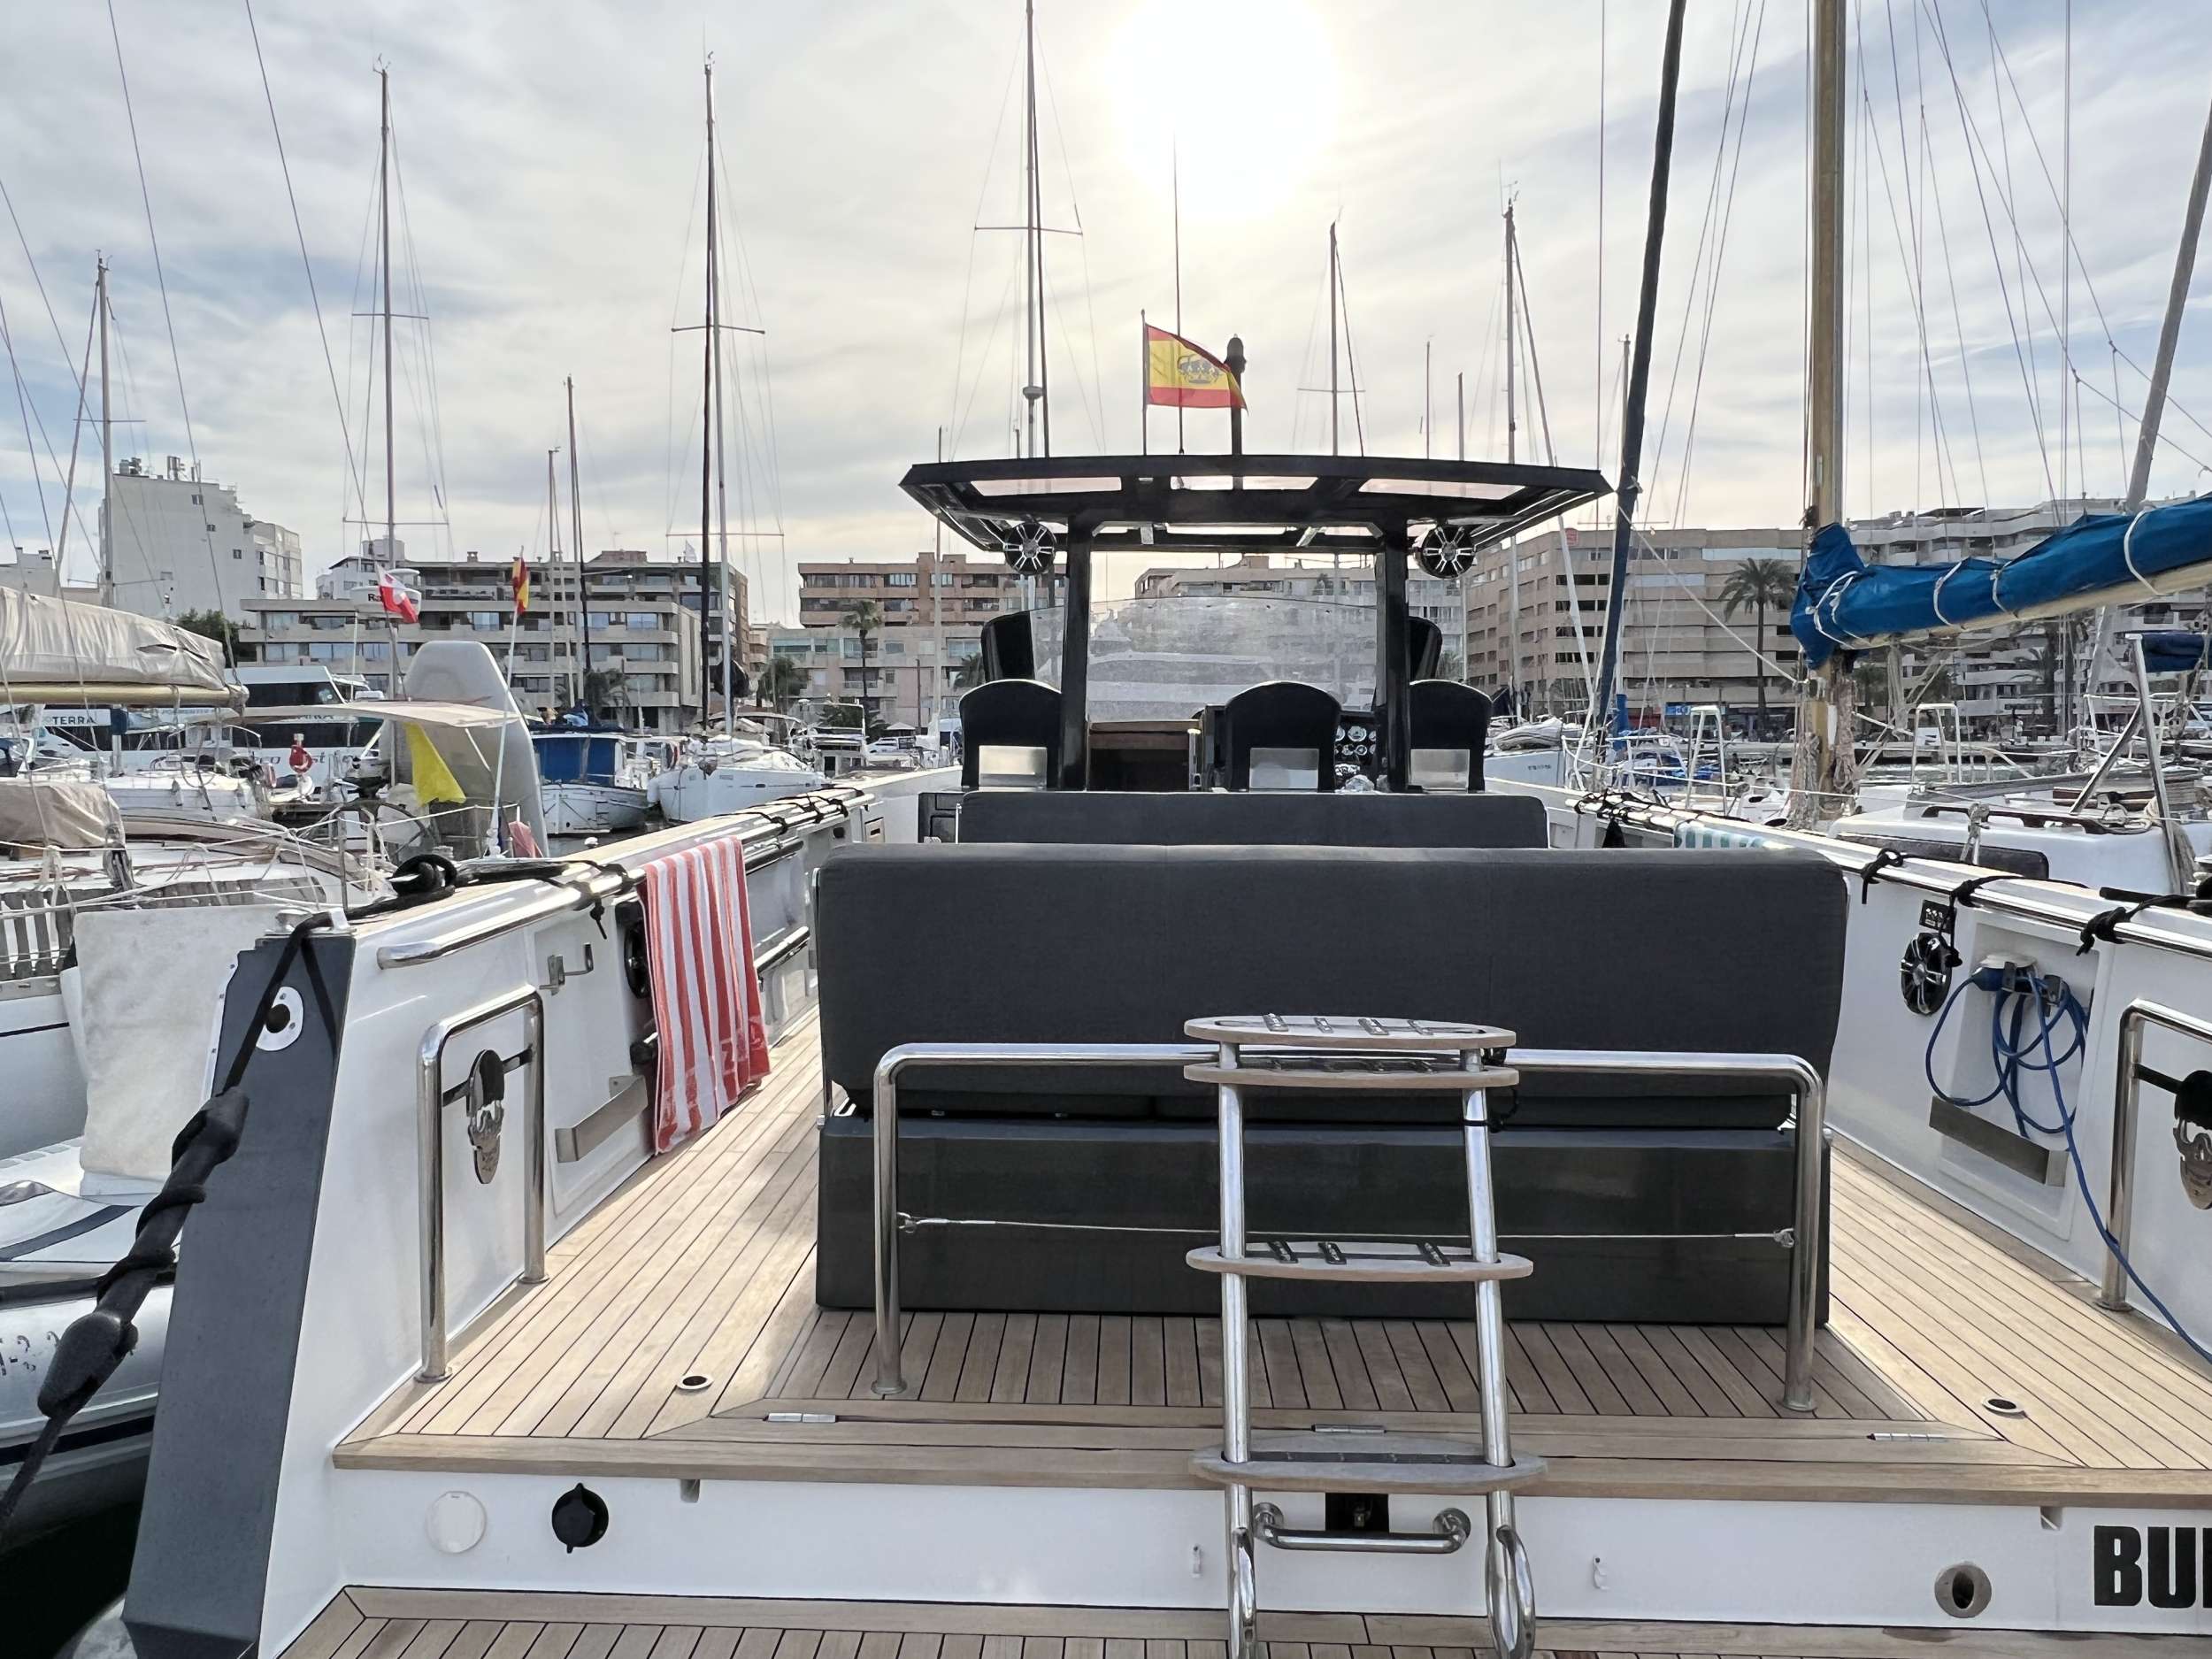 BULLITT - Motor Boat Charter Spain & Boat hire in Balearics & Spain 2